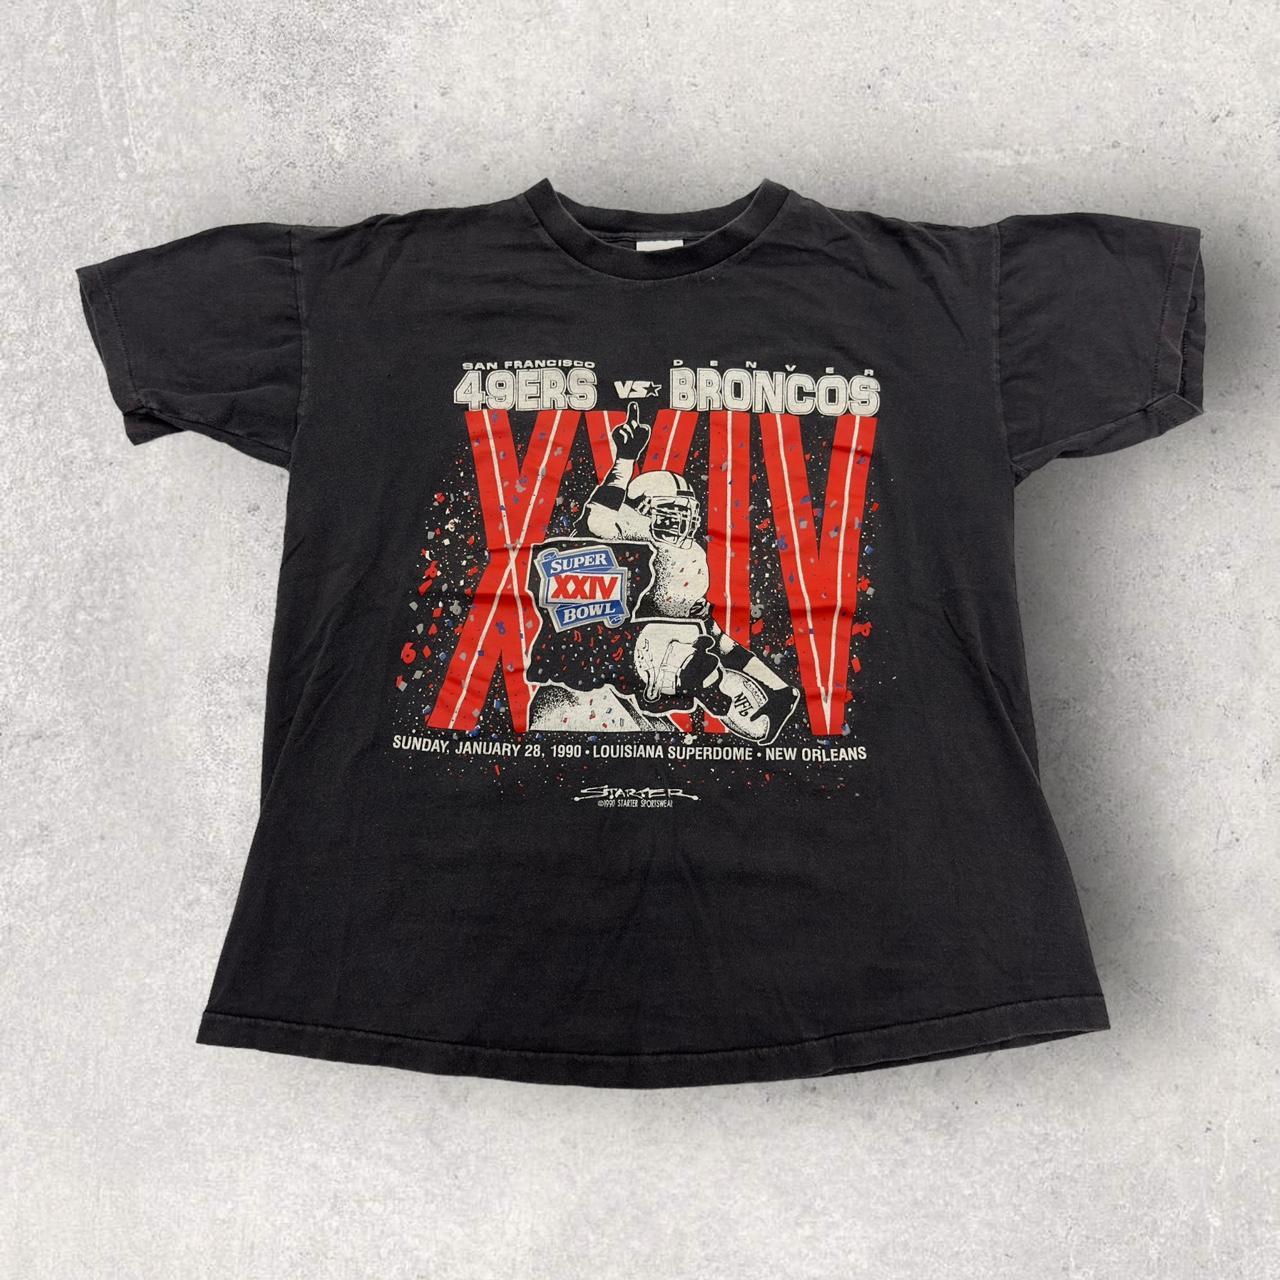 Starter Men's Shirt - Black - XL